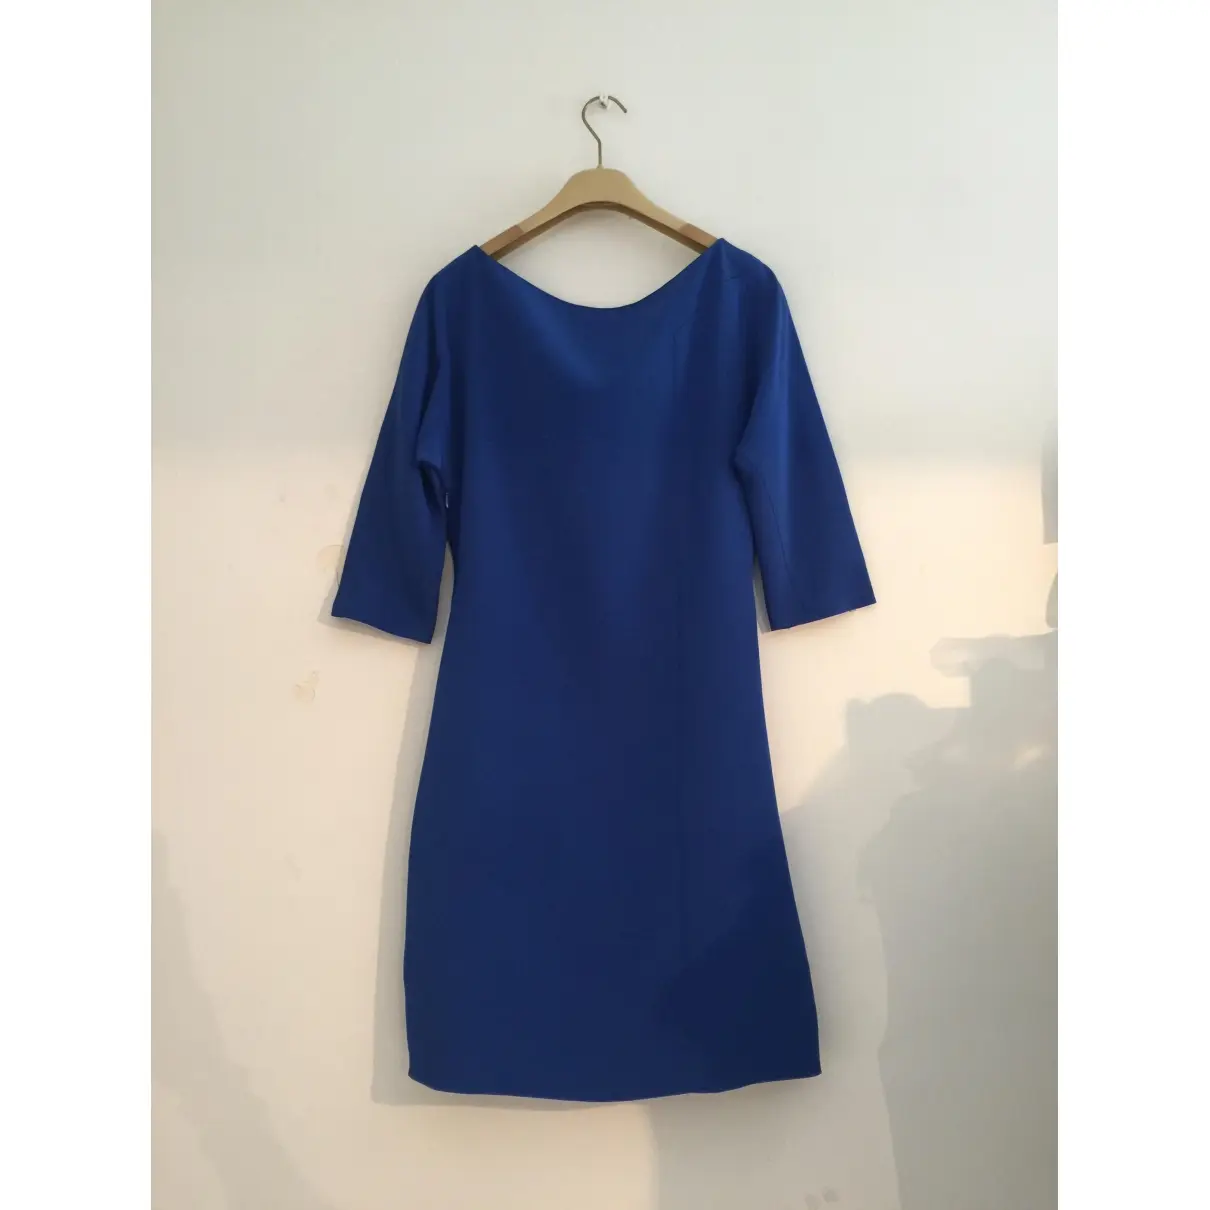 Antonio Berardi Mini dress for sale